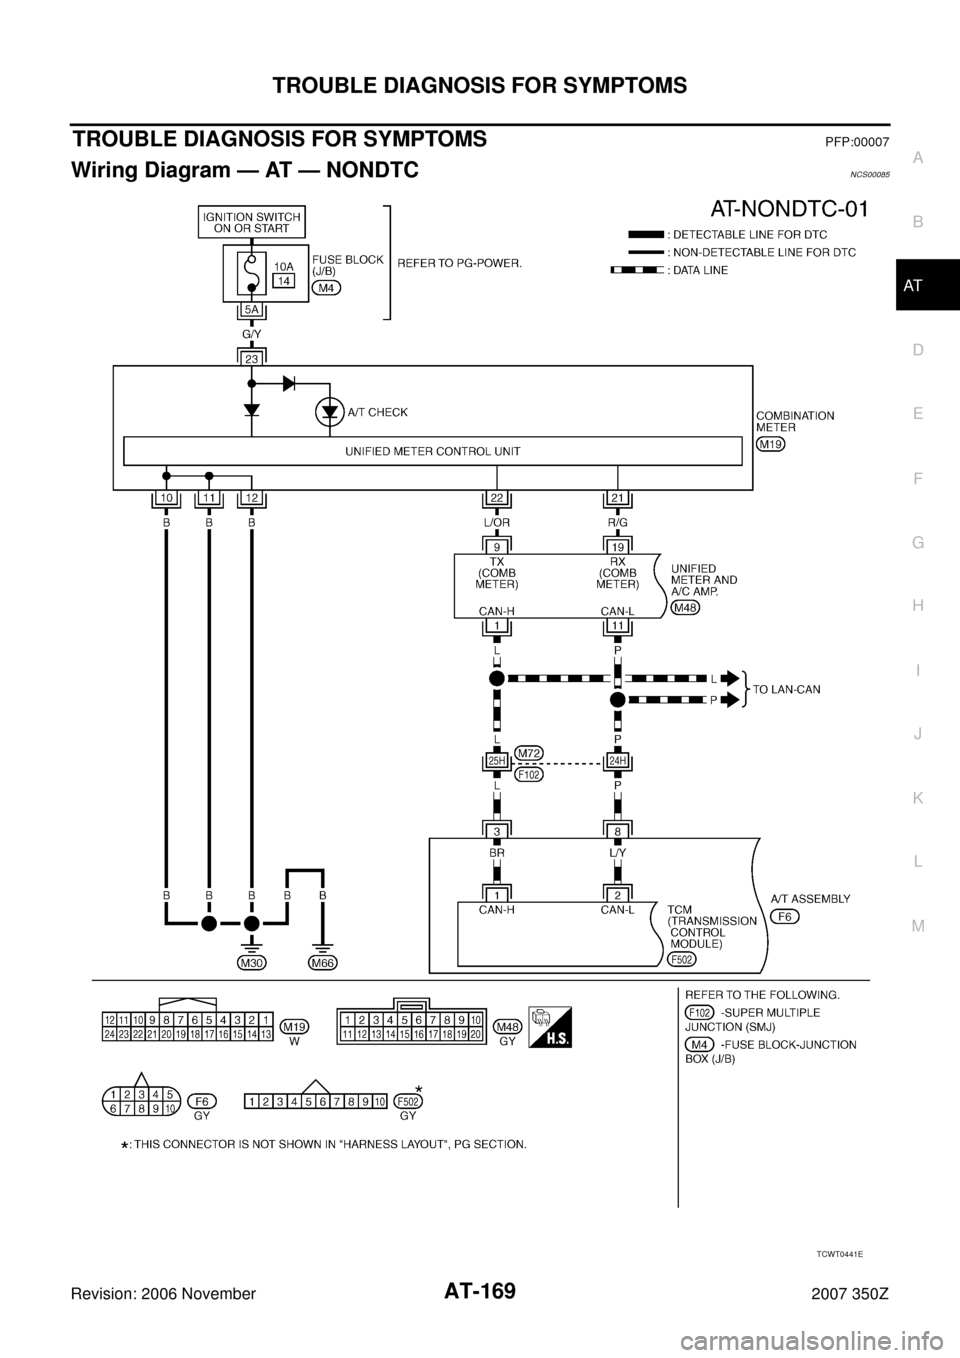 NISSAN 350Z 2007 Z33 Automatic Transmission Workshop Manual TROUBLE DIAGNOSIS FOR SYMPTOMS
AT-169
D
E
F
G
H
I
J
K
L
MA
B
AT
Revision: 2006 November2007 350Z
TROUBLE DIAGNOSIS FOR SYMPTOMSPFP:00007
Wiring Diagram — AT — NONDTCNCS00085
TCWT0441E 